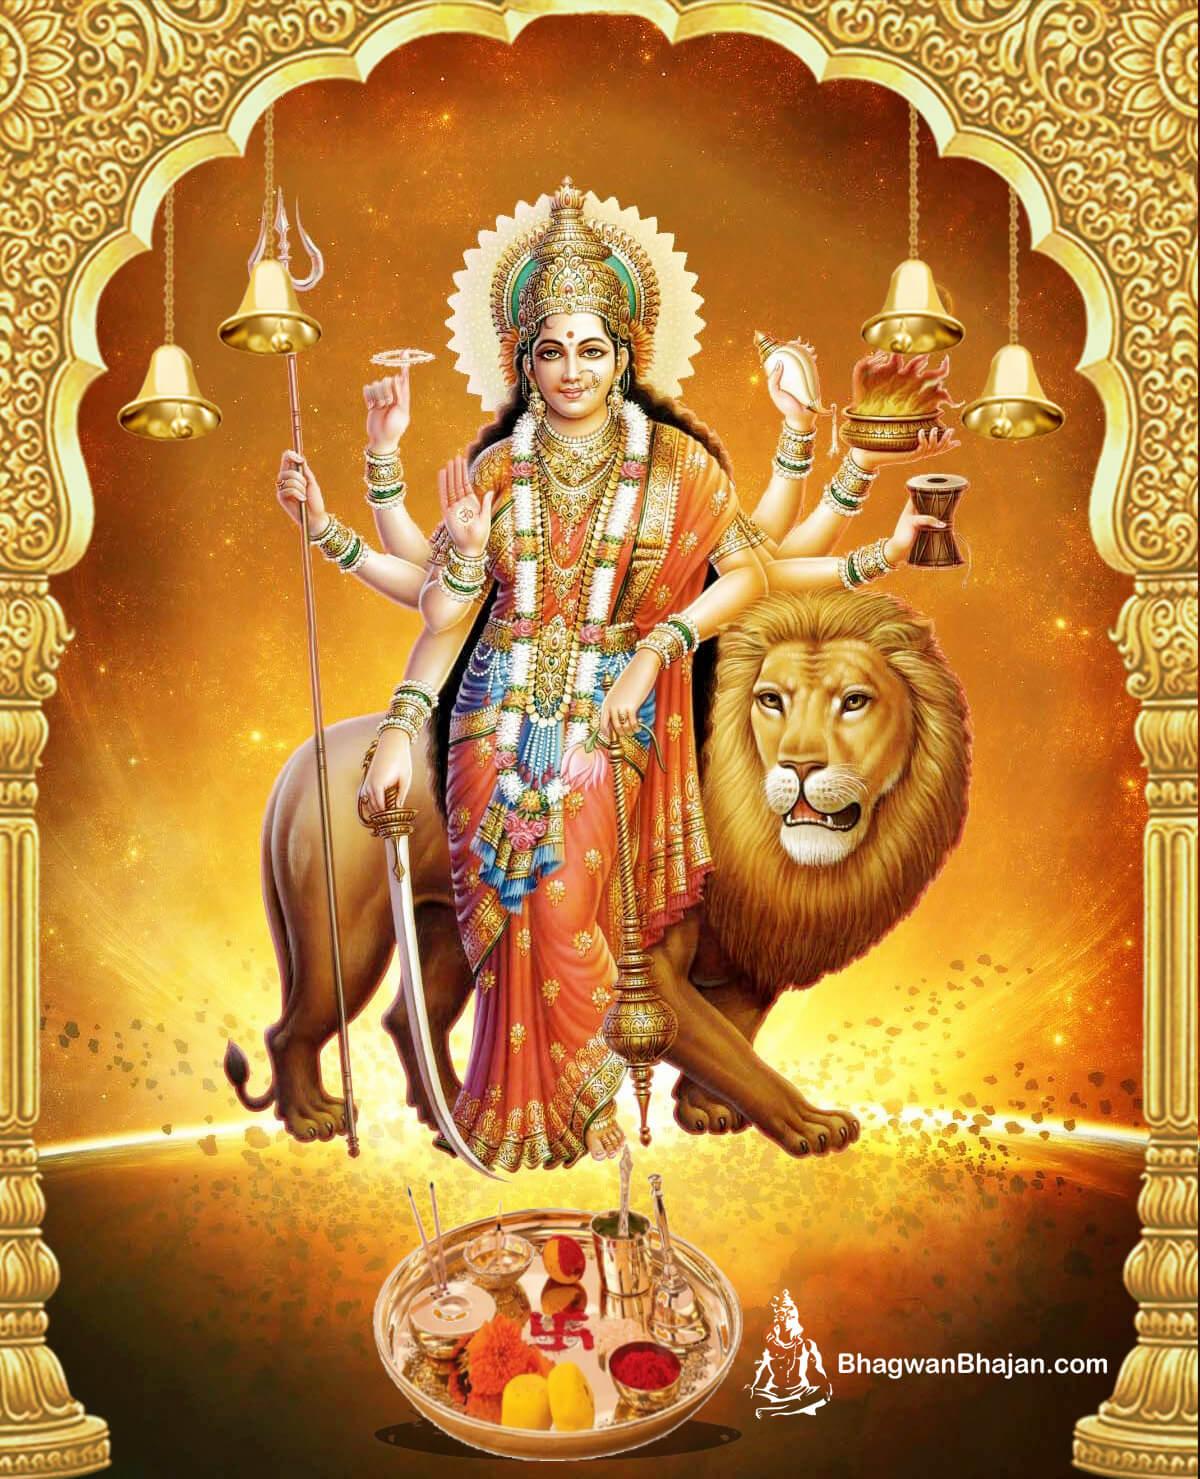 Download Free HD Wallpaper, Photo & Image of Maa Durga. Maa Durga Wallpaper Download. Maa Durga Photo Download